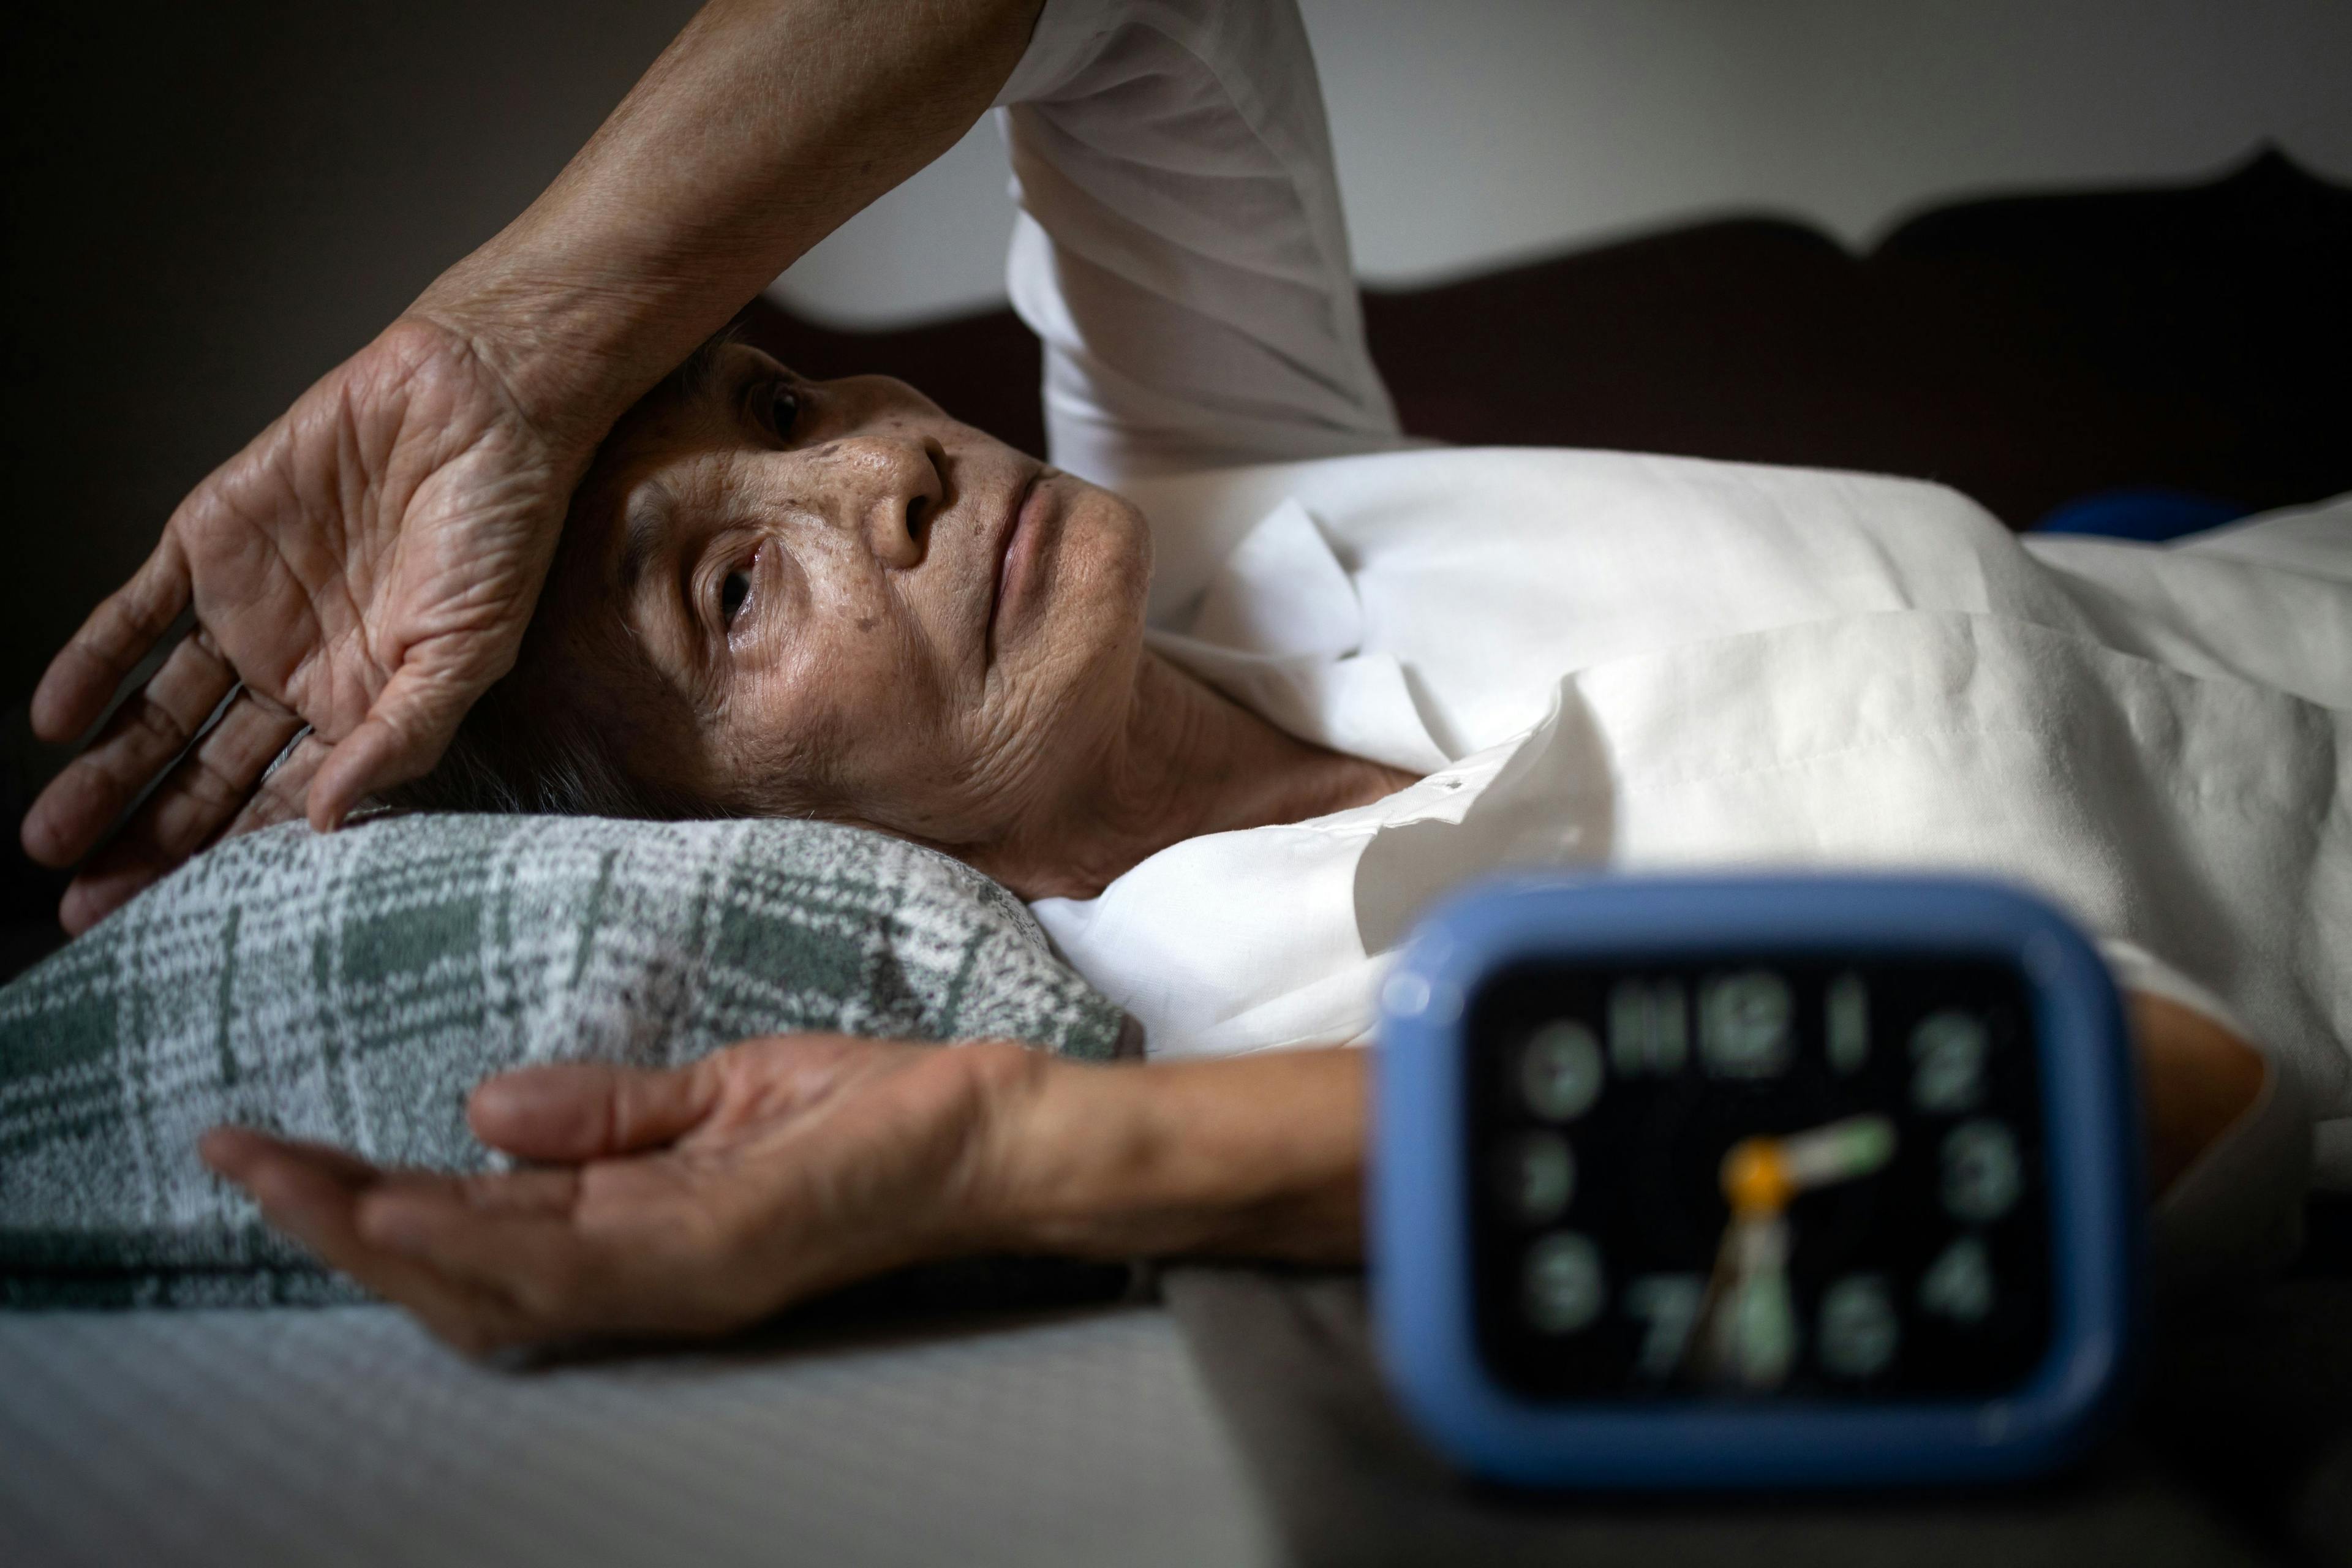 Elderly Asian Woman Having Trouble Sleeping | image credit: Satjawat - stock.adobe.com